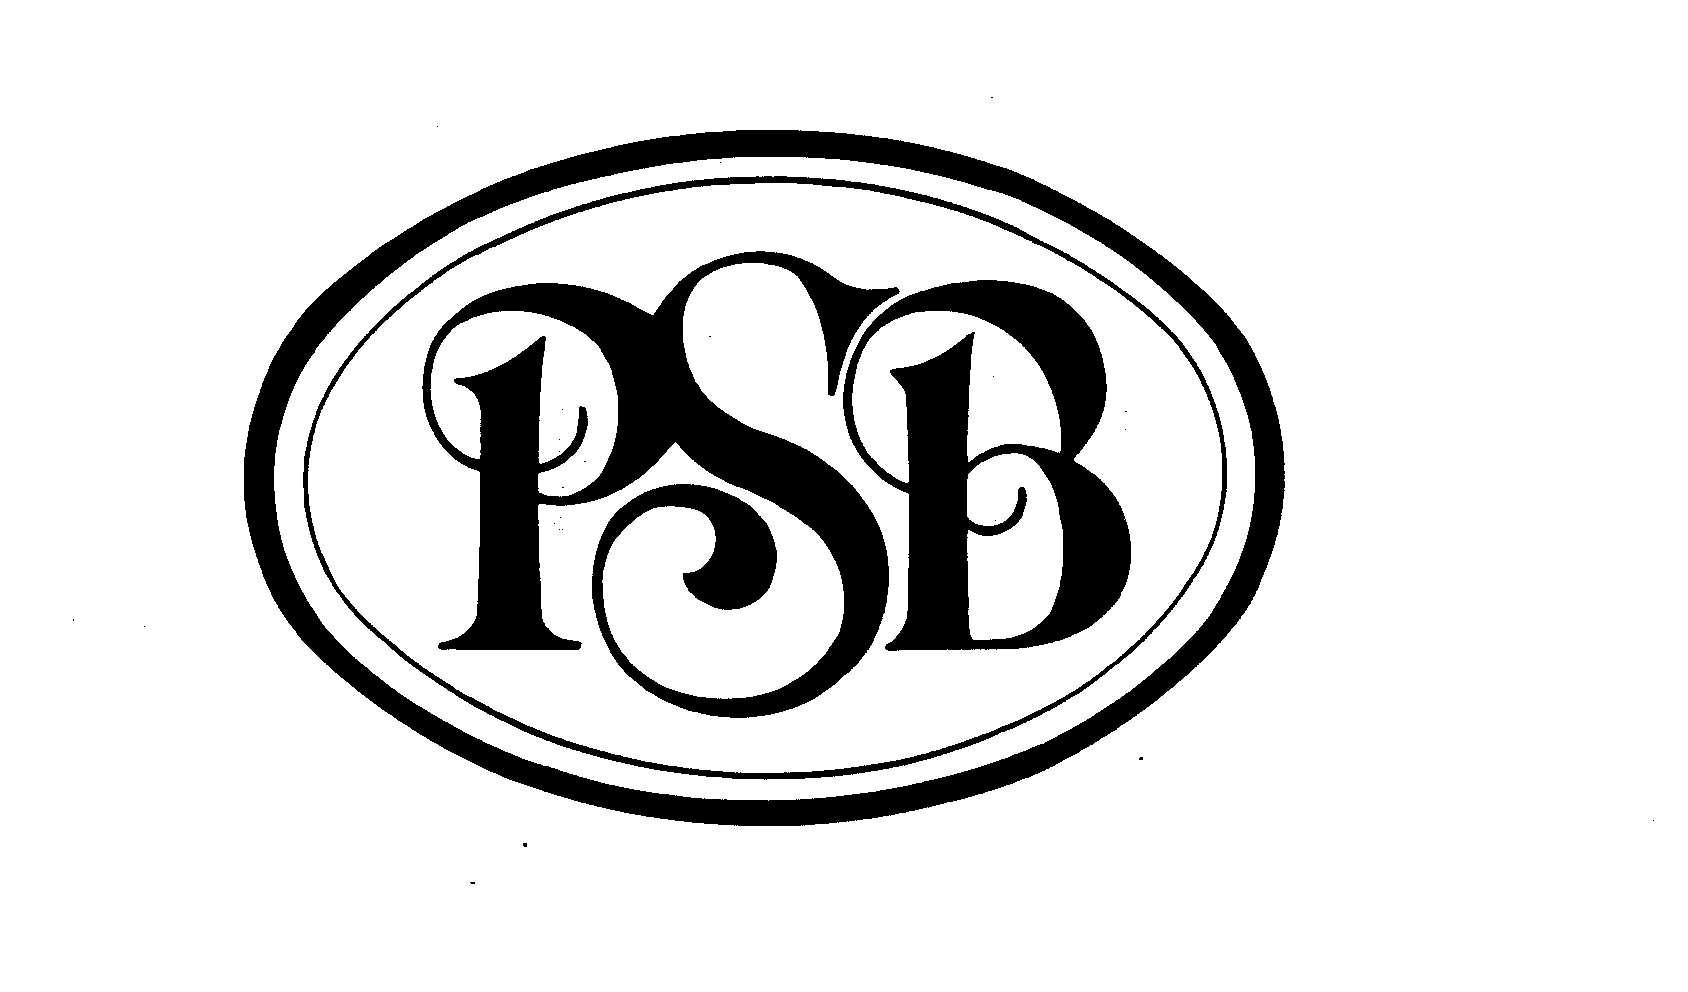 Trademark Logo PSB